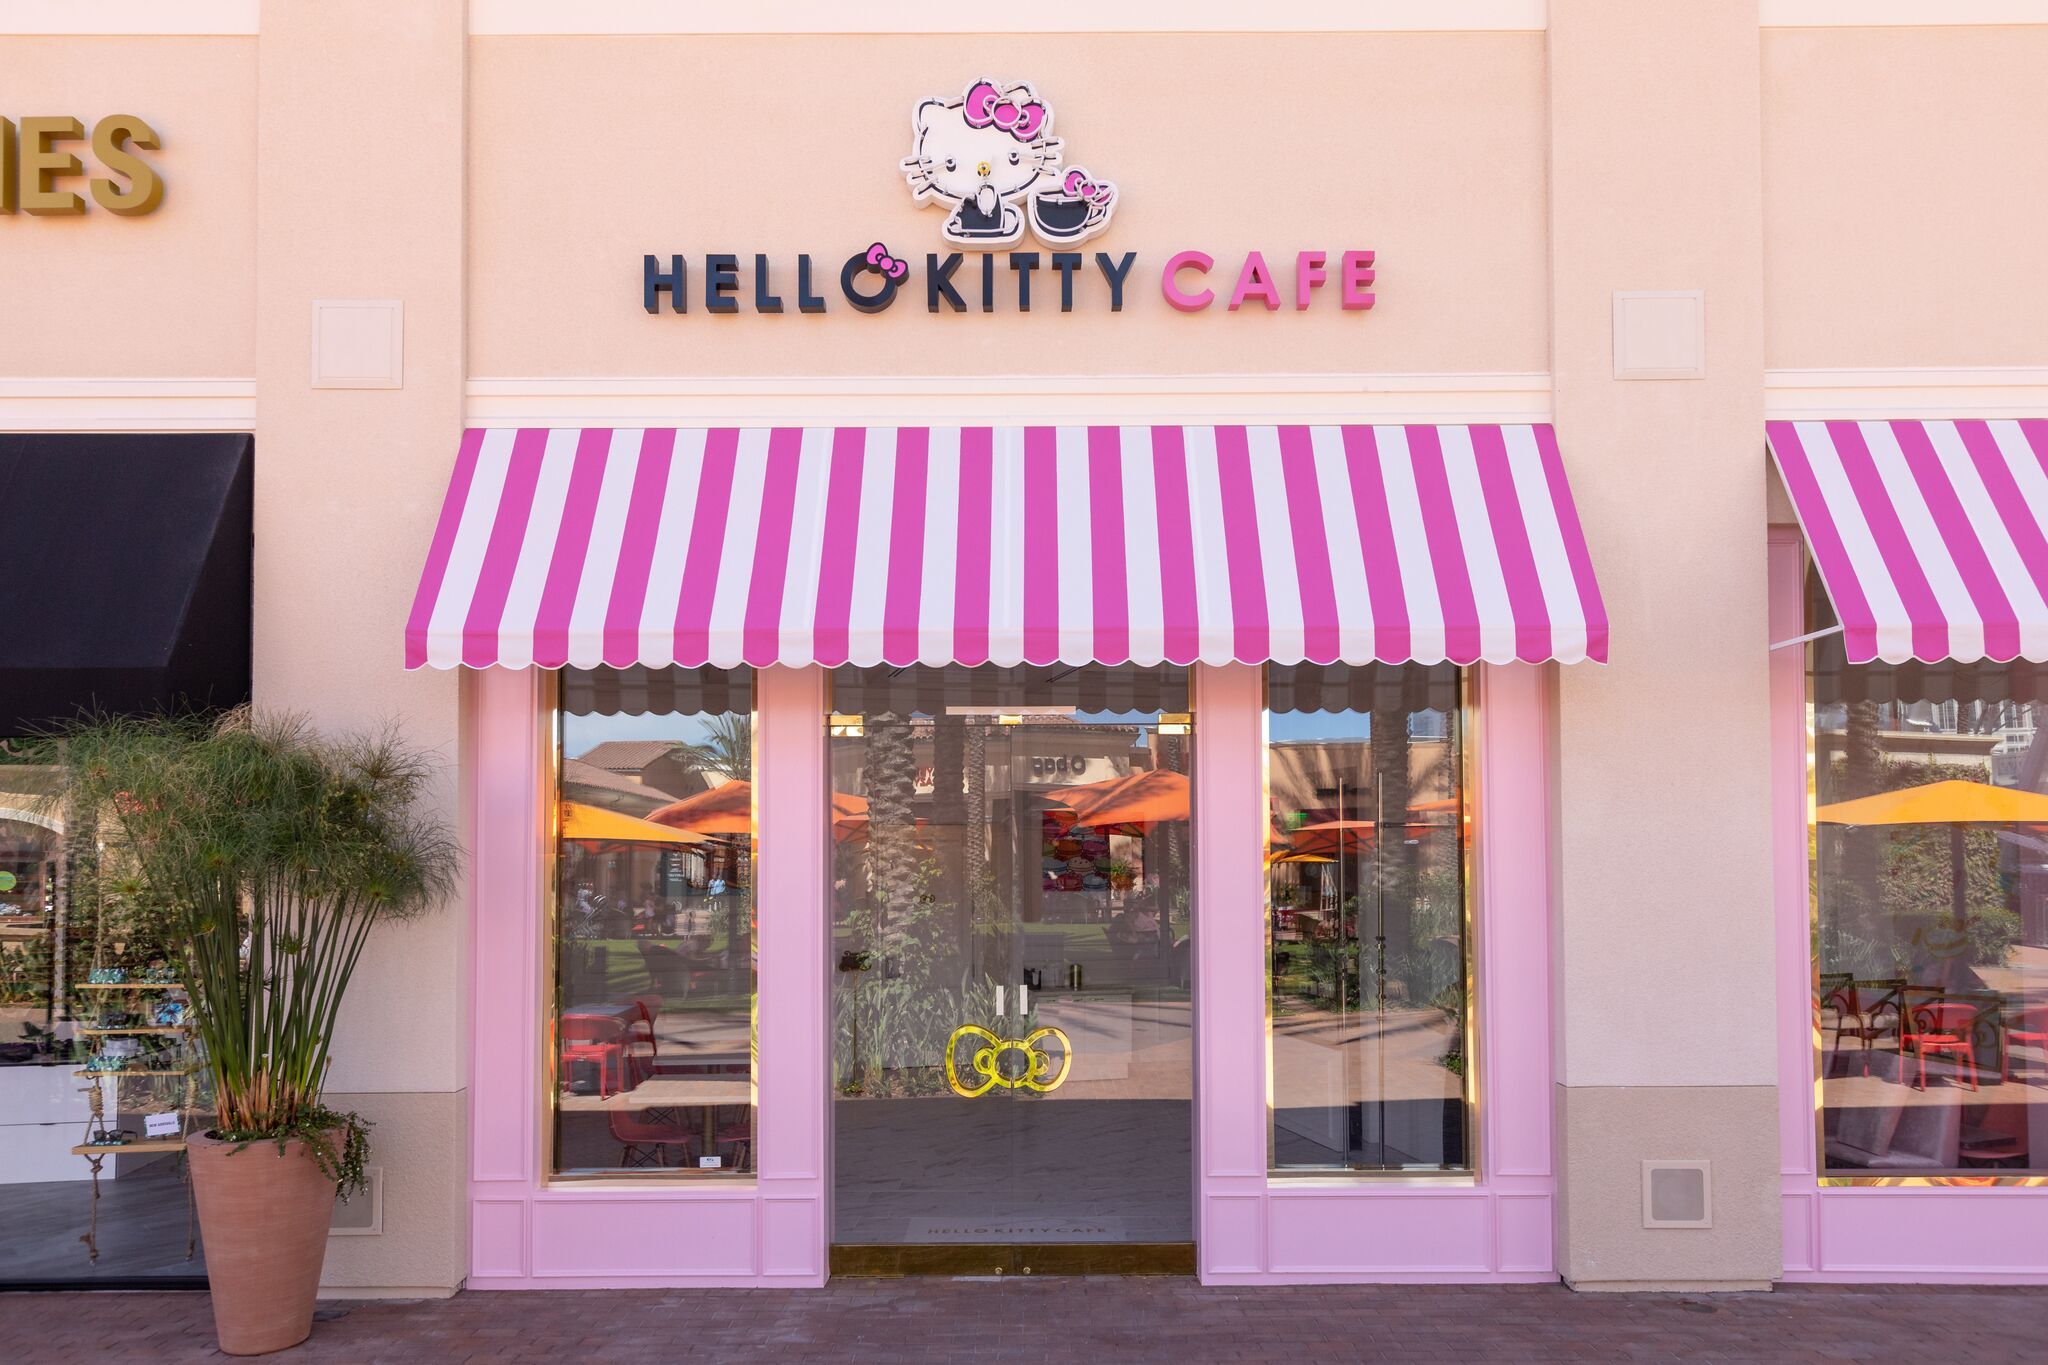 HELLO KITTY CAFE - CLOSED, 1157 Photos & 296 Reviews